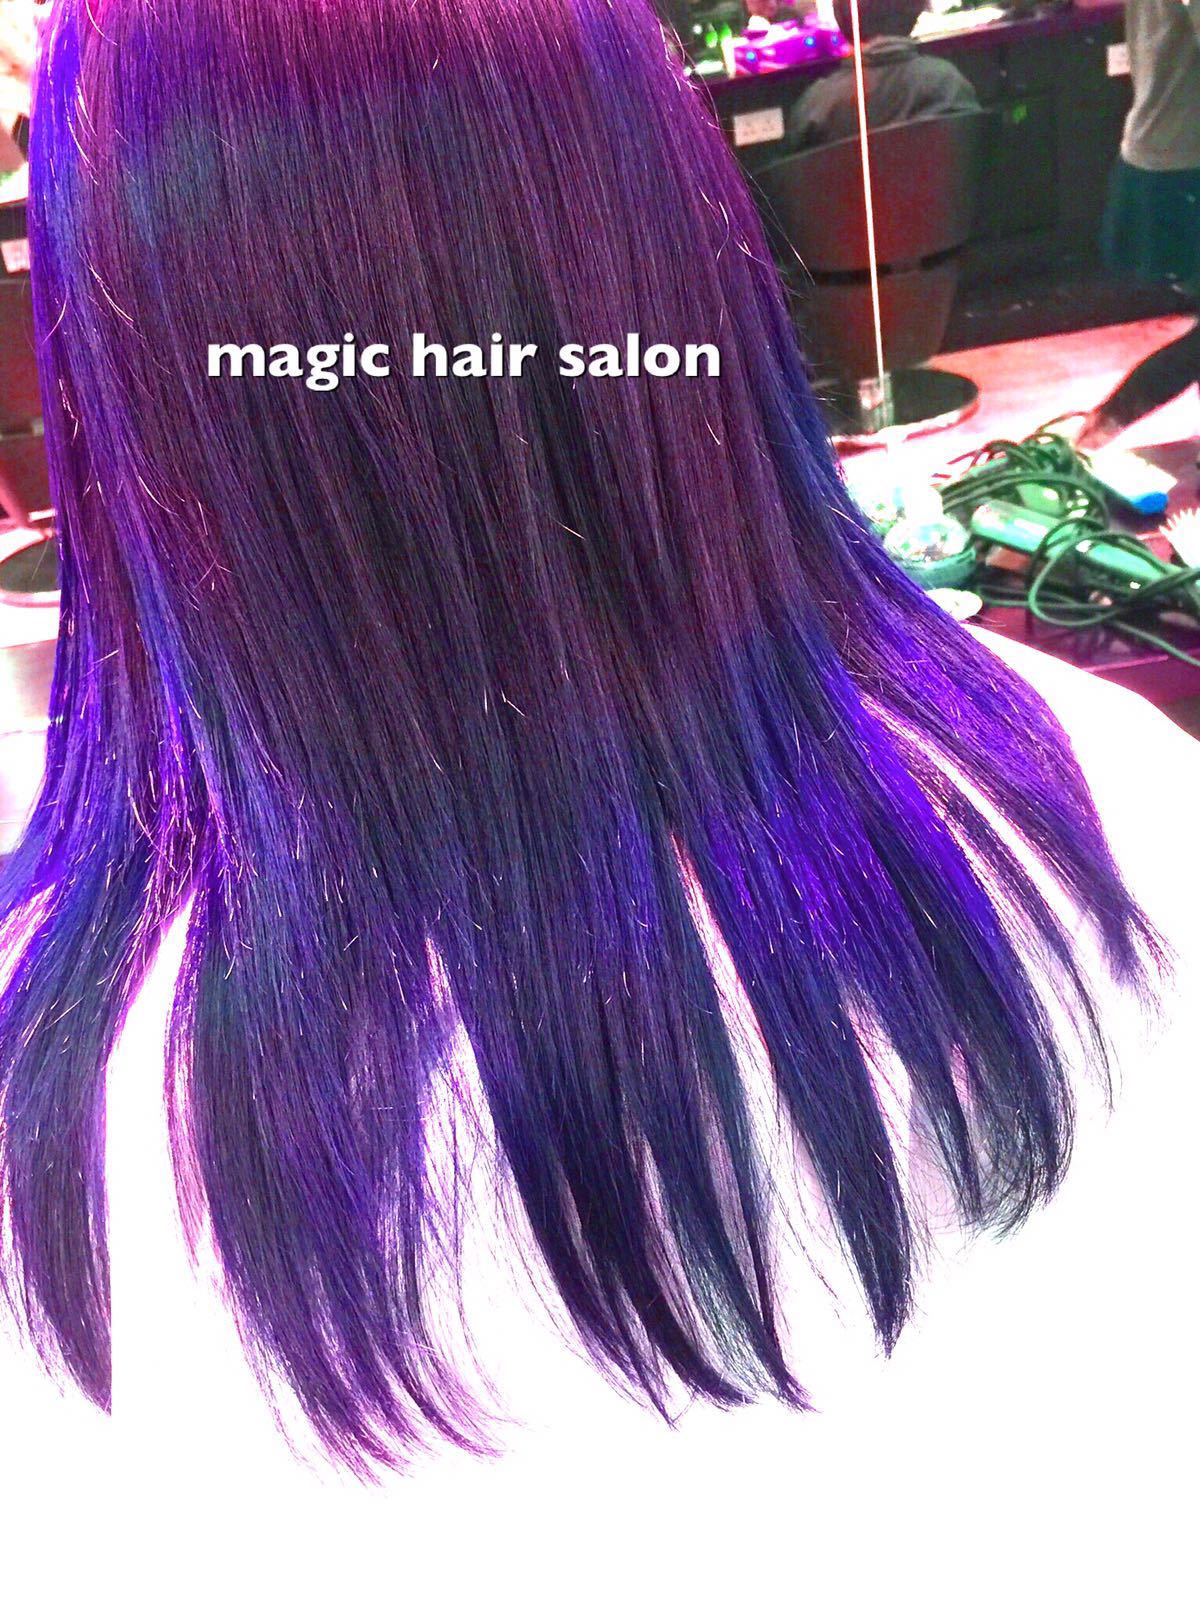 http://www.magic-hairsalon.com/files/IMG-20160409-WA0036.jpg